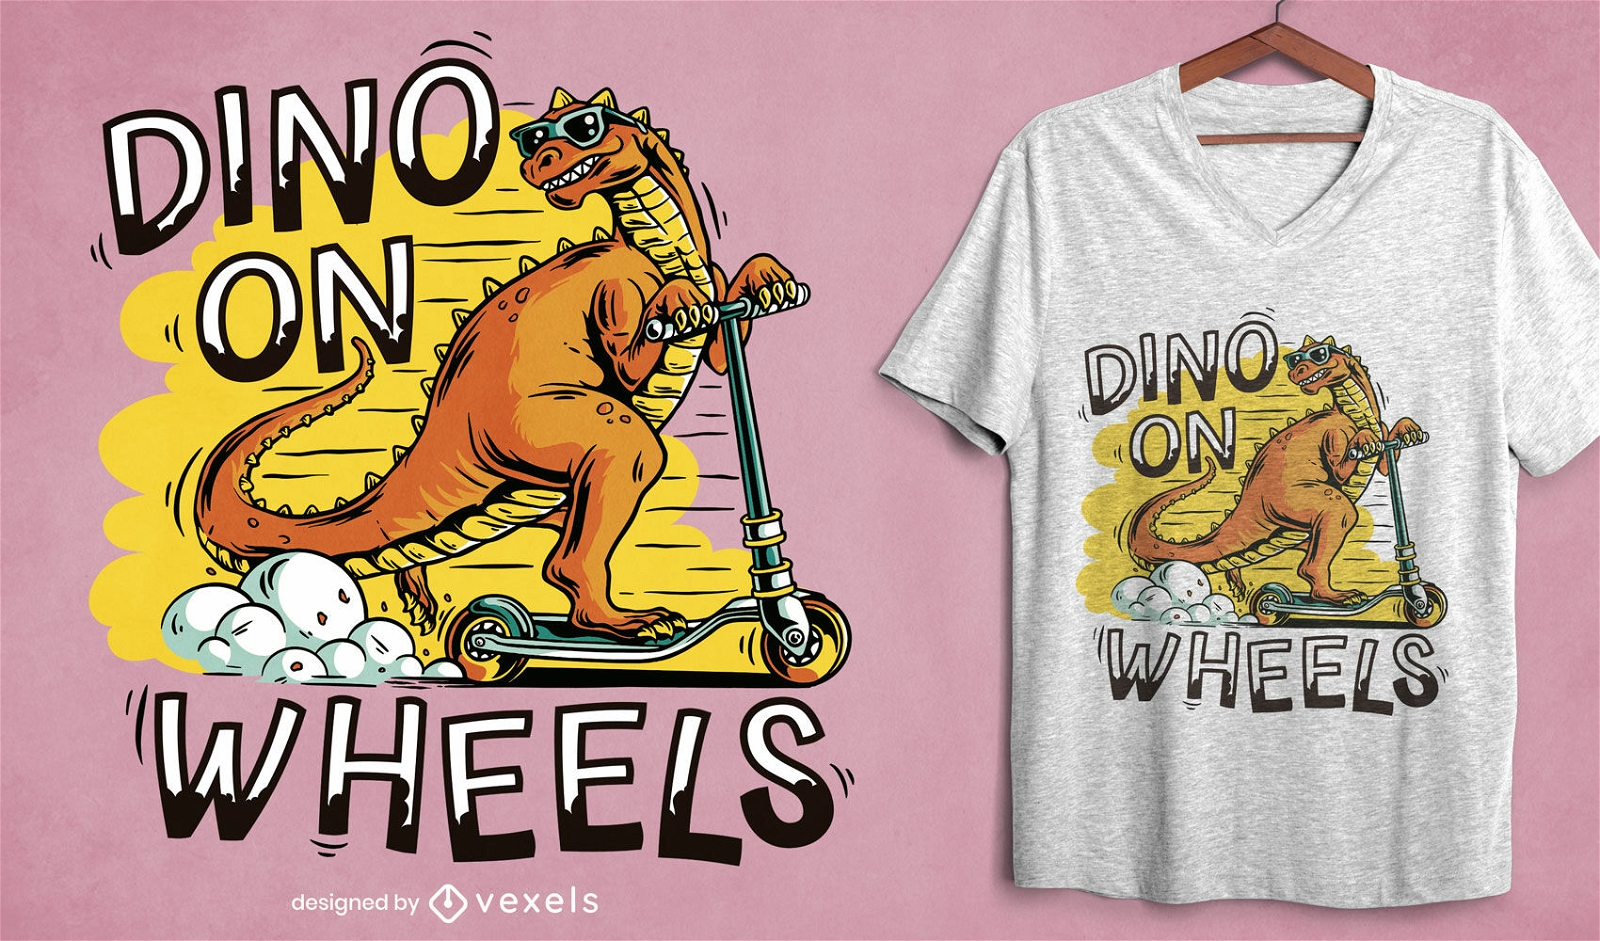 Cool dinosaur on wheels t-shirt design